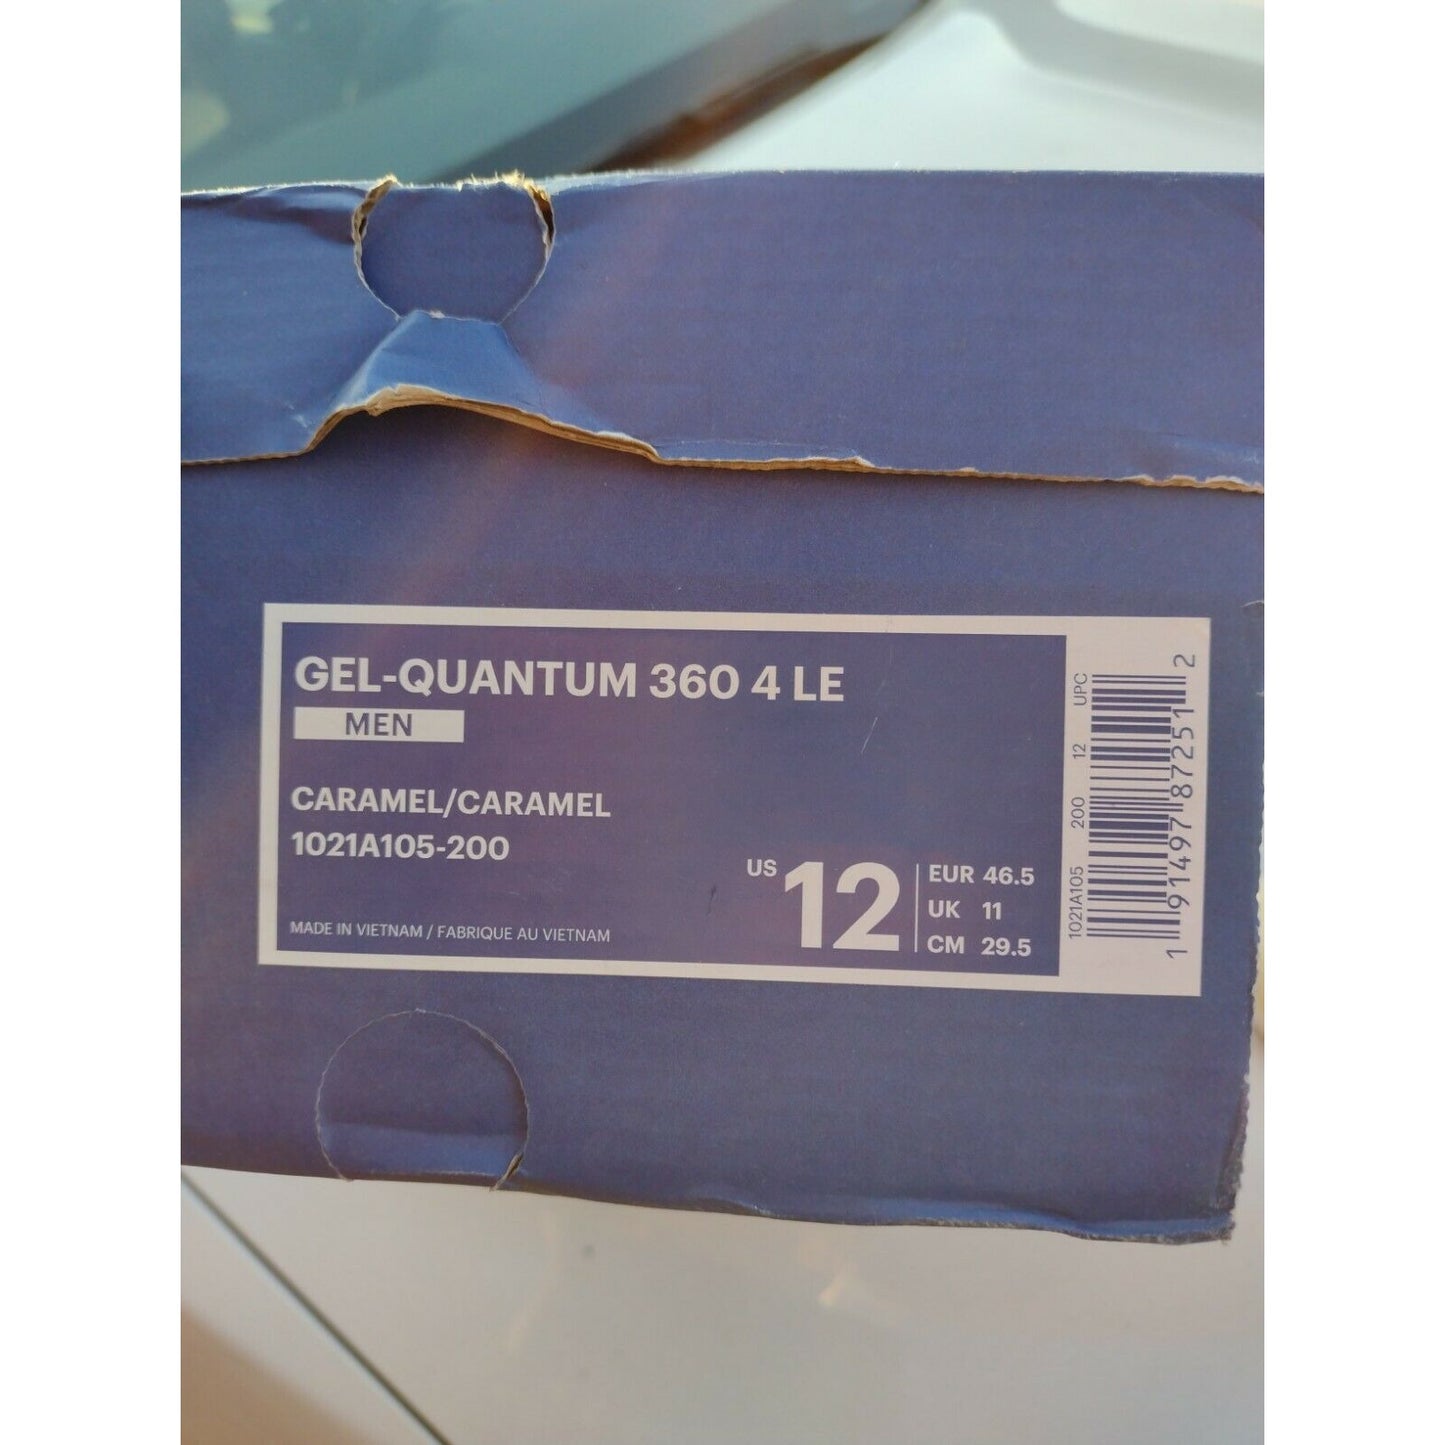 ASICS GEL-Quantum men 360 4 LE Caramel running shoes size 12 us